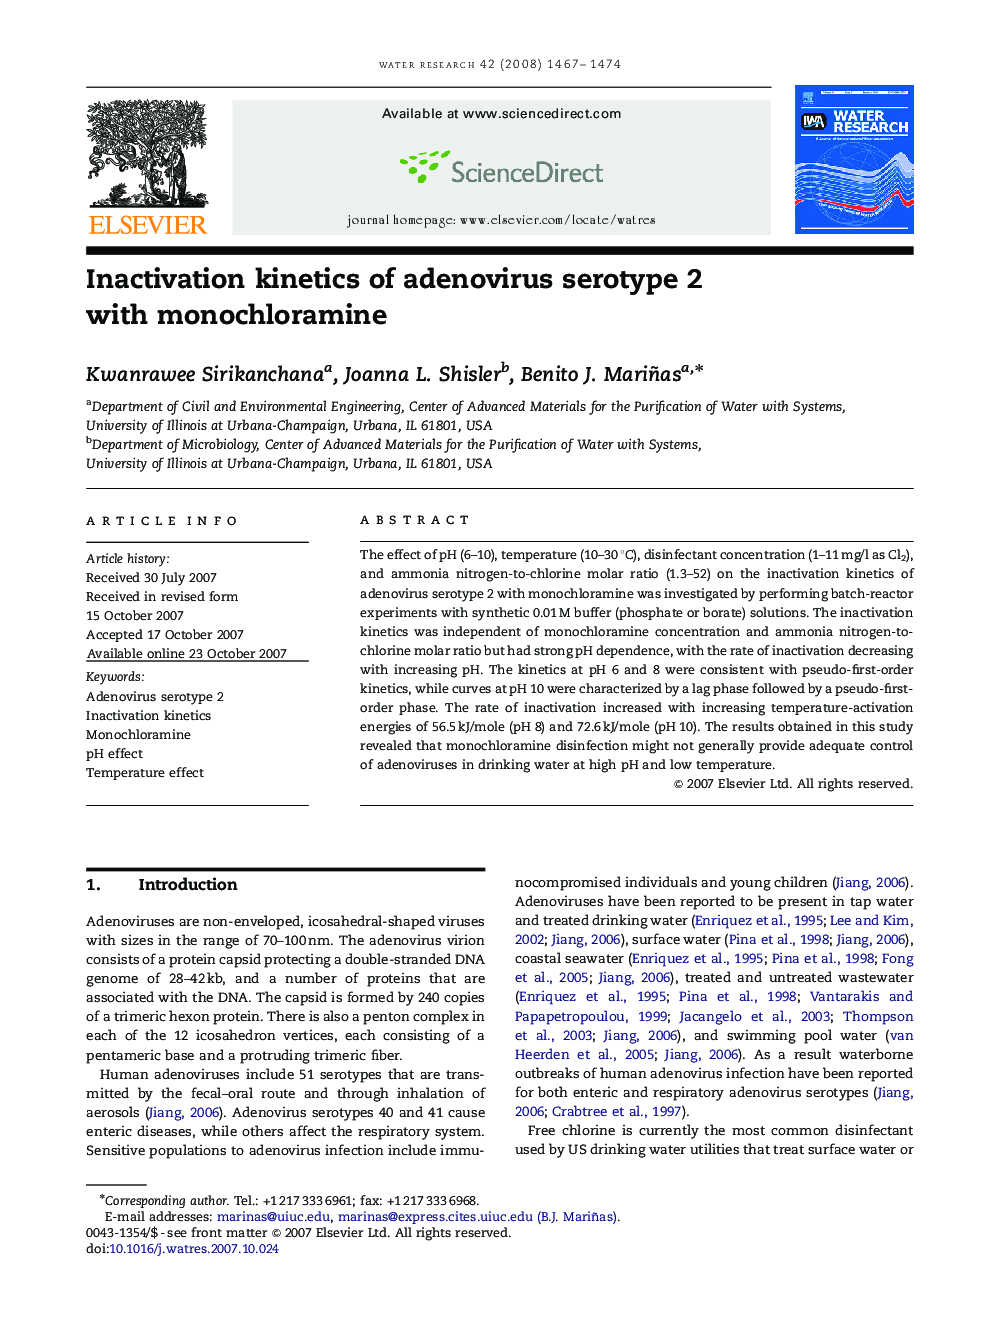 Inactivation kinetics of adenovirus serotype 2 with monochloramine